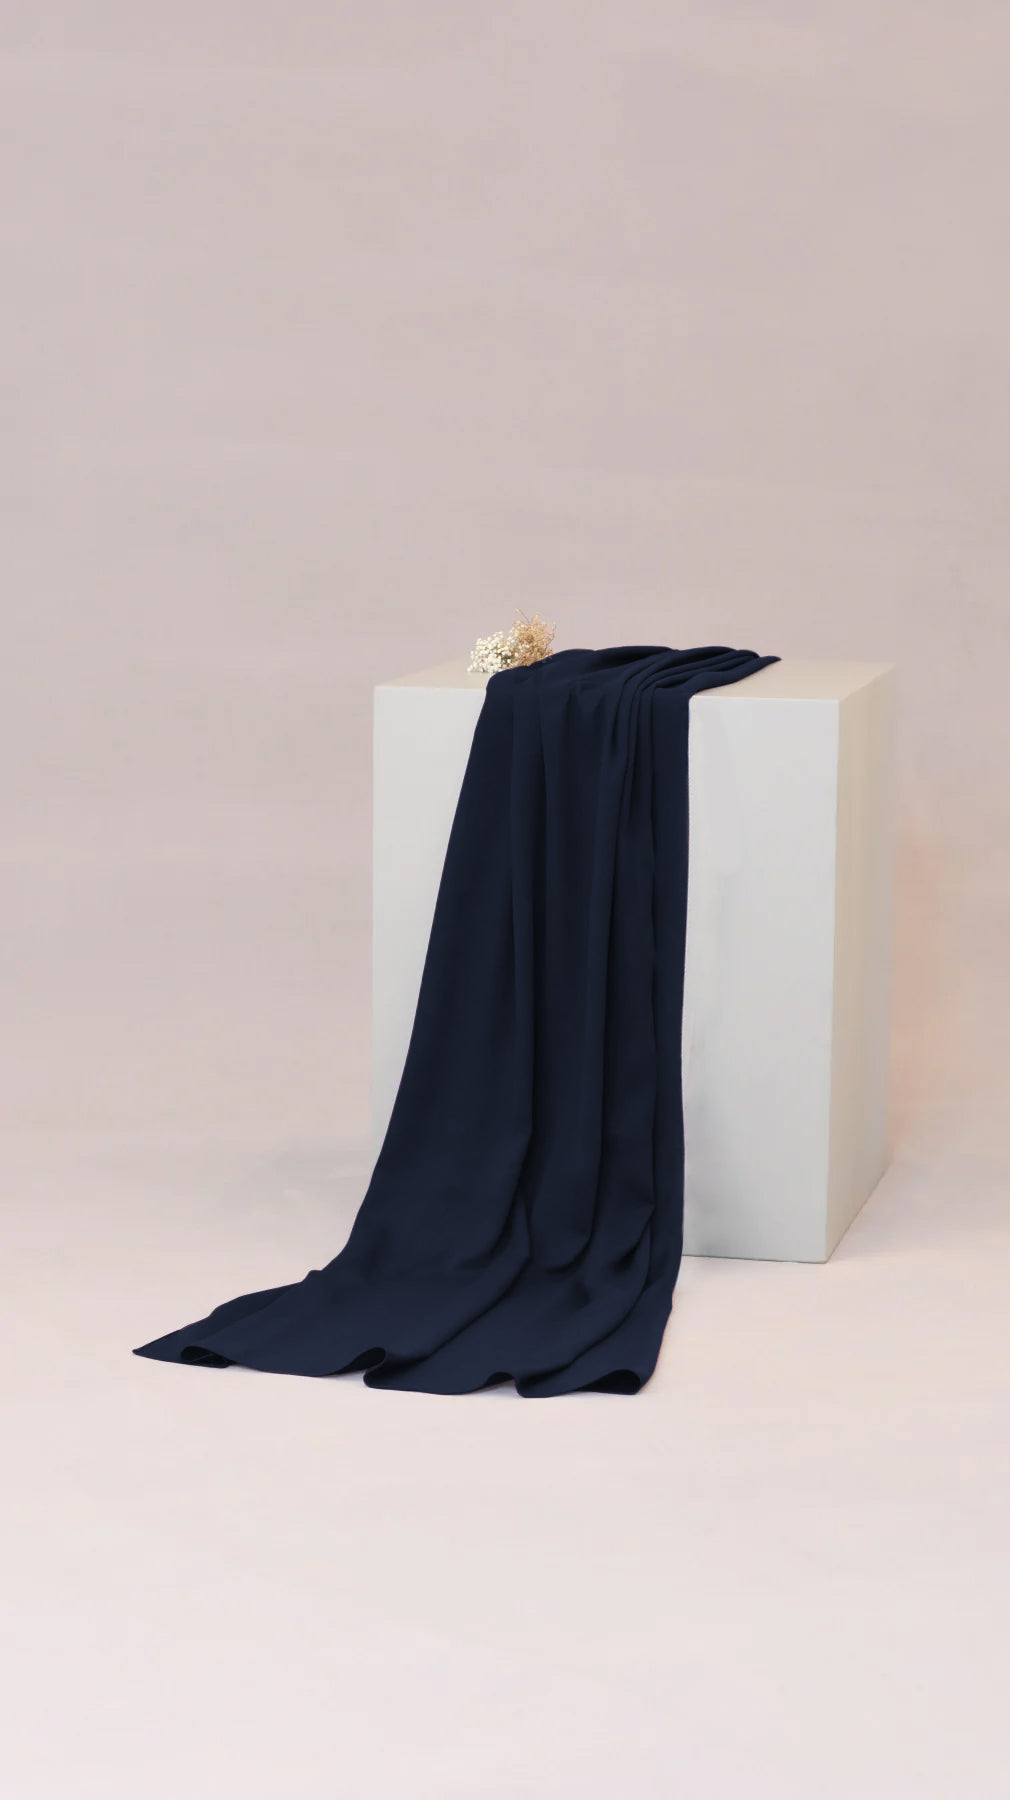 georgette hijab in dark blue colour